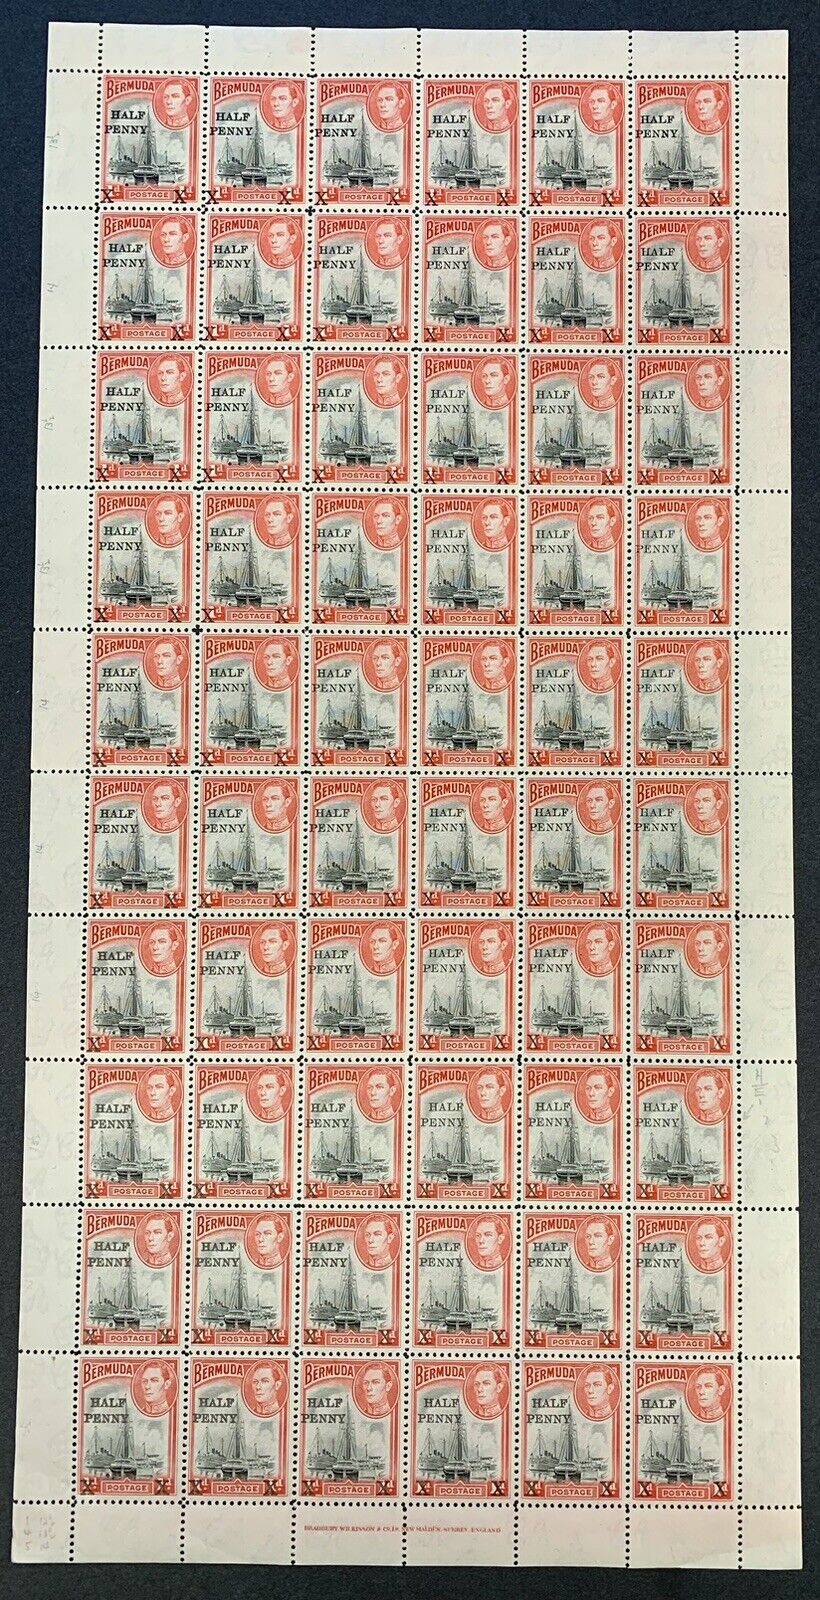 Bermuda, Scott #129, King George VI,  1/2p on 1p Sheet of 60, Mint, N.H., V.F.